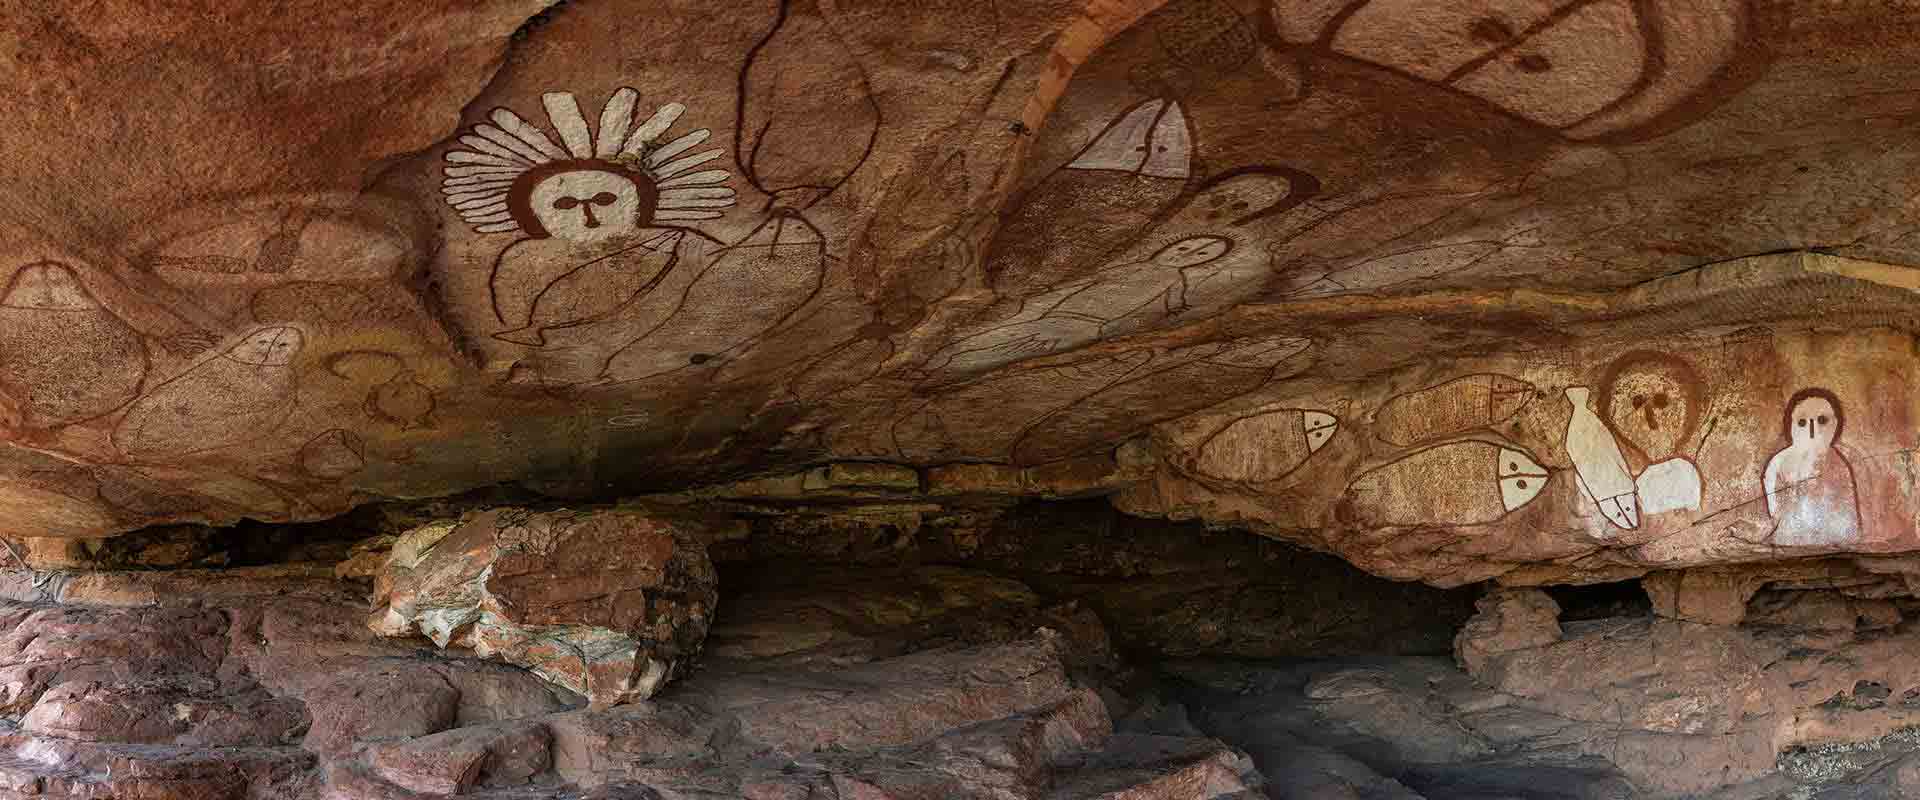 Appreciate the history of the Kimberley region through Aboriginal rock art